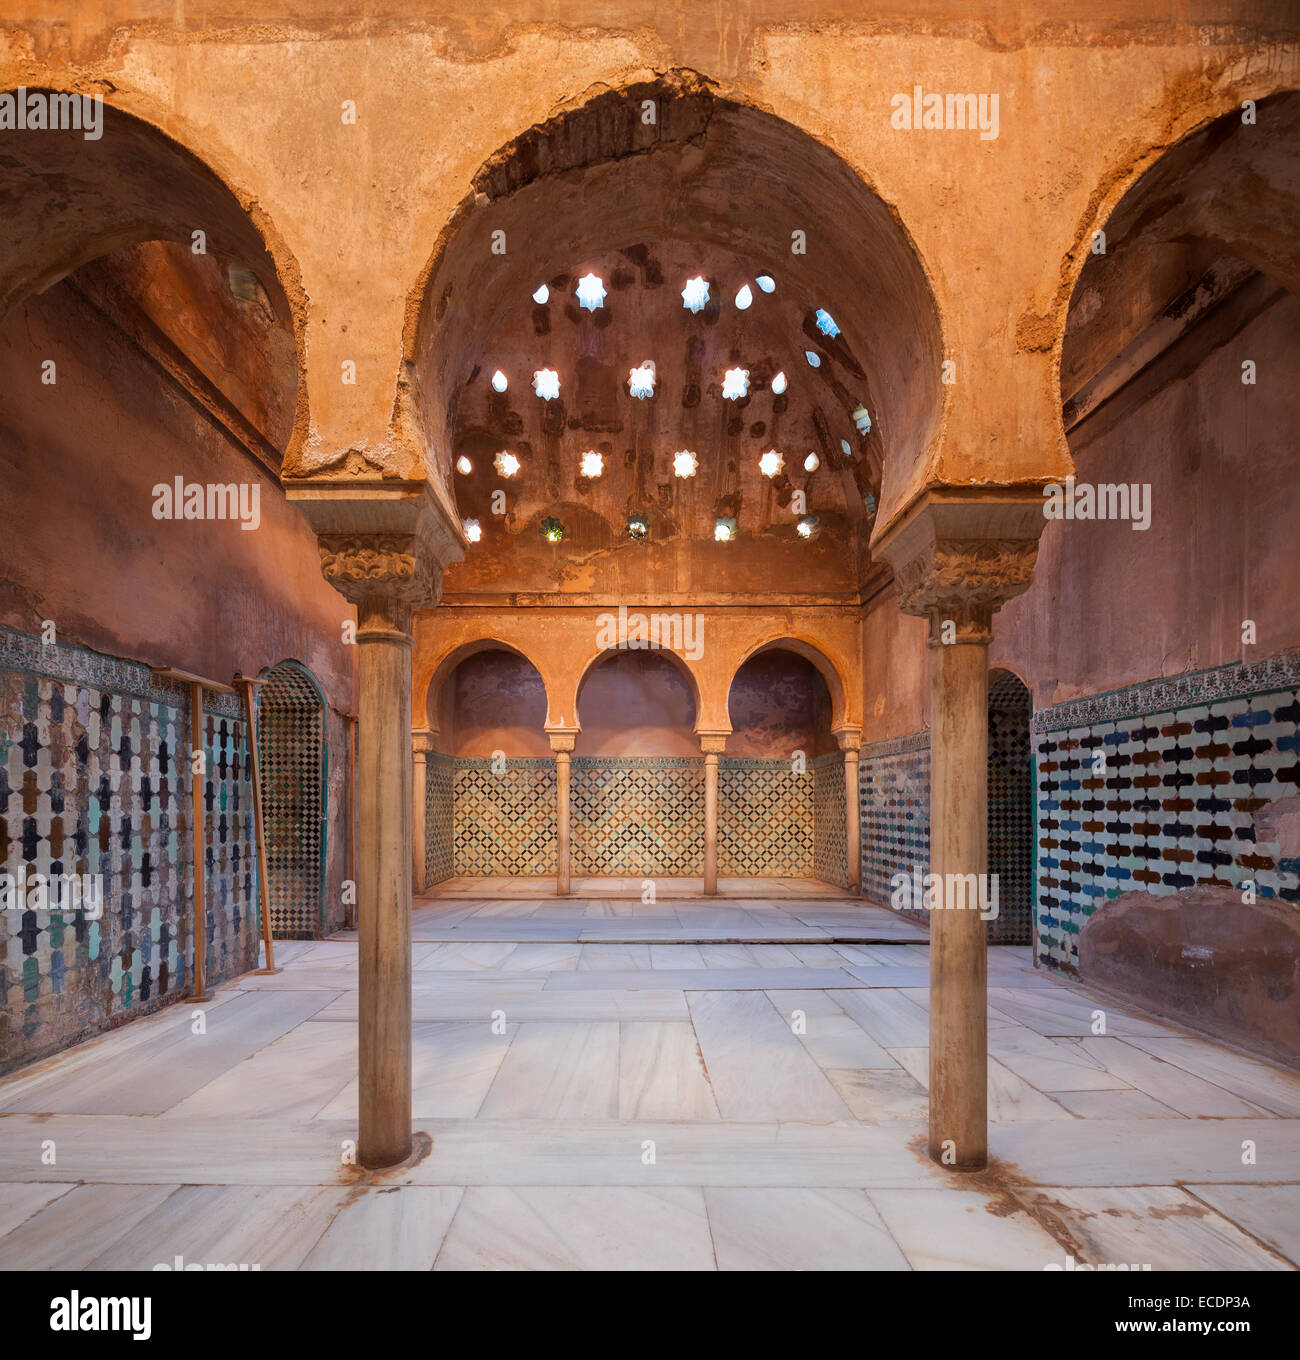 Hammam, Hamam, Arab Baths in the Alhambra Castle Palace Granada Spain. Stock Photo